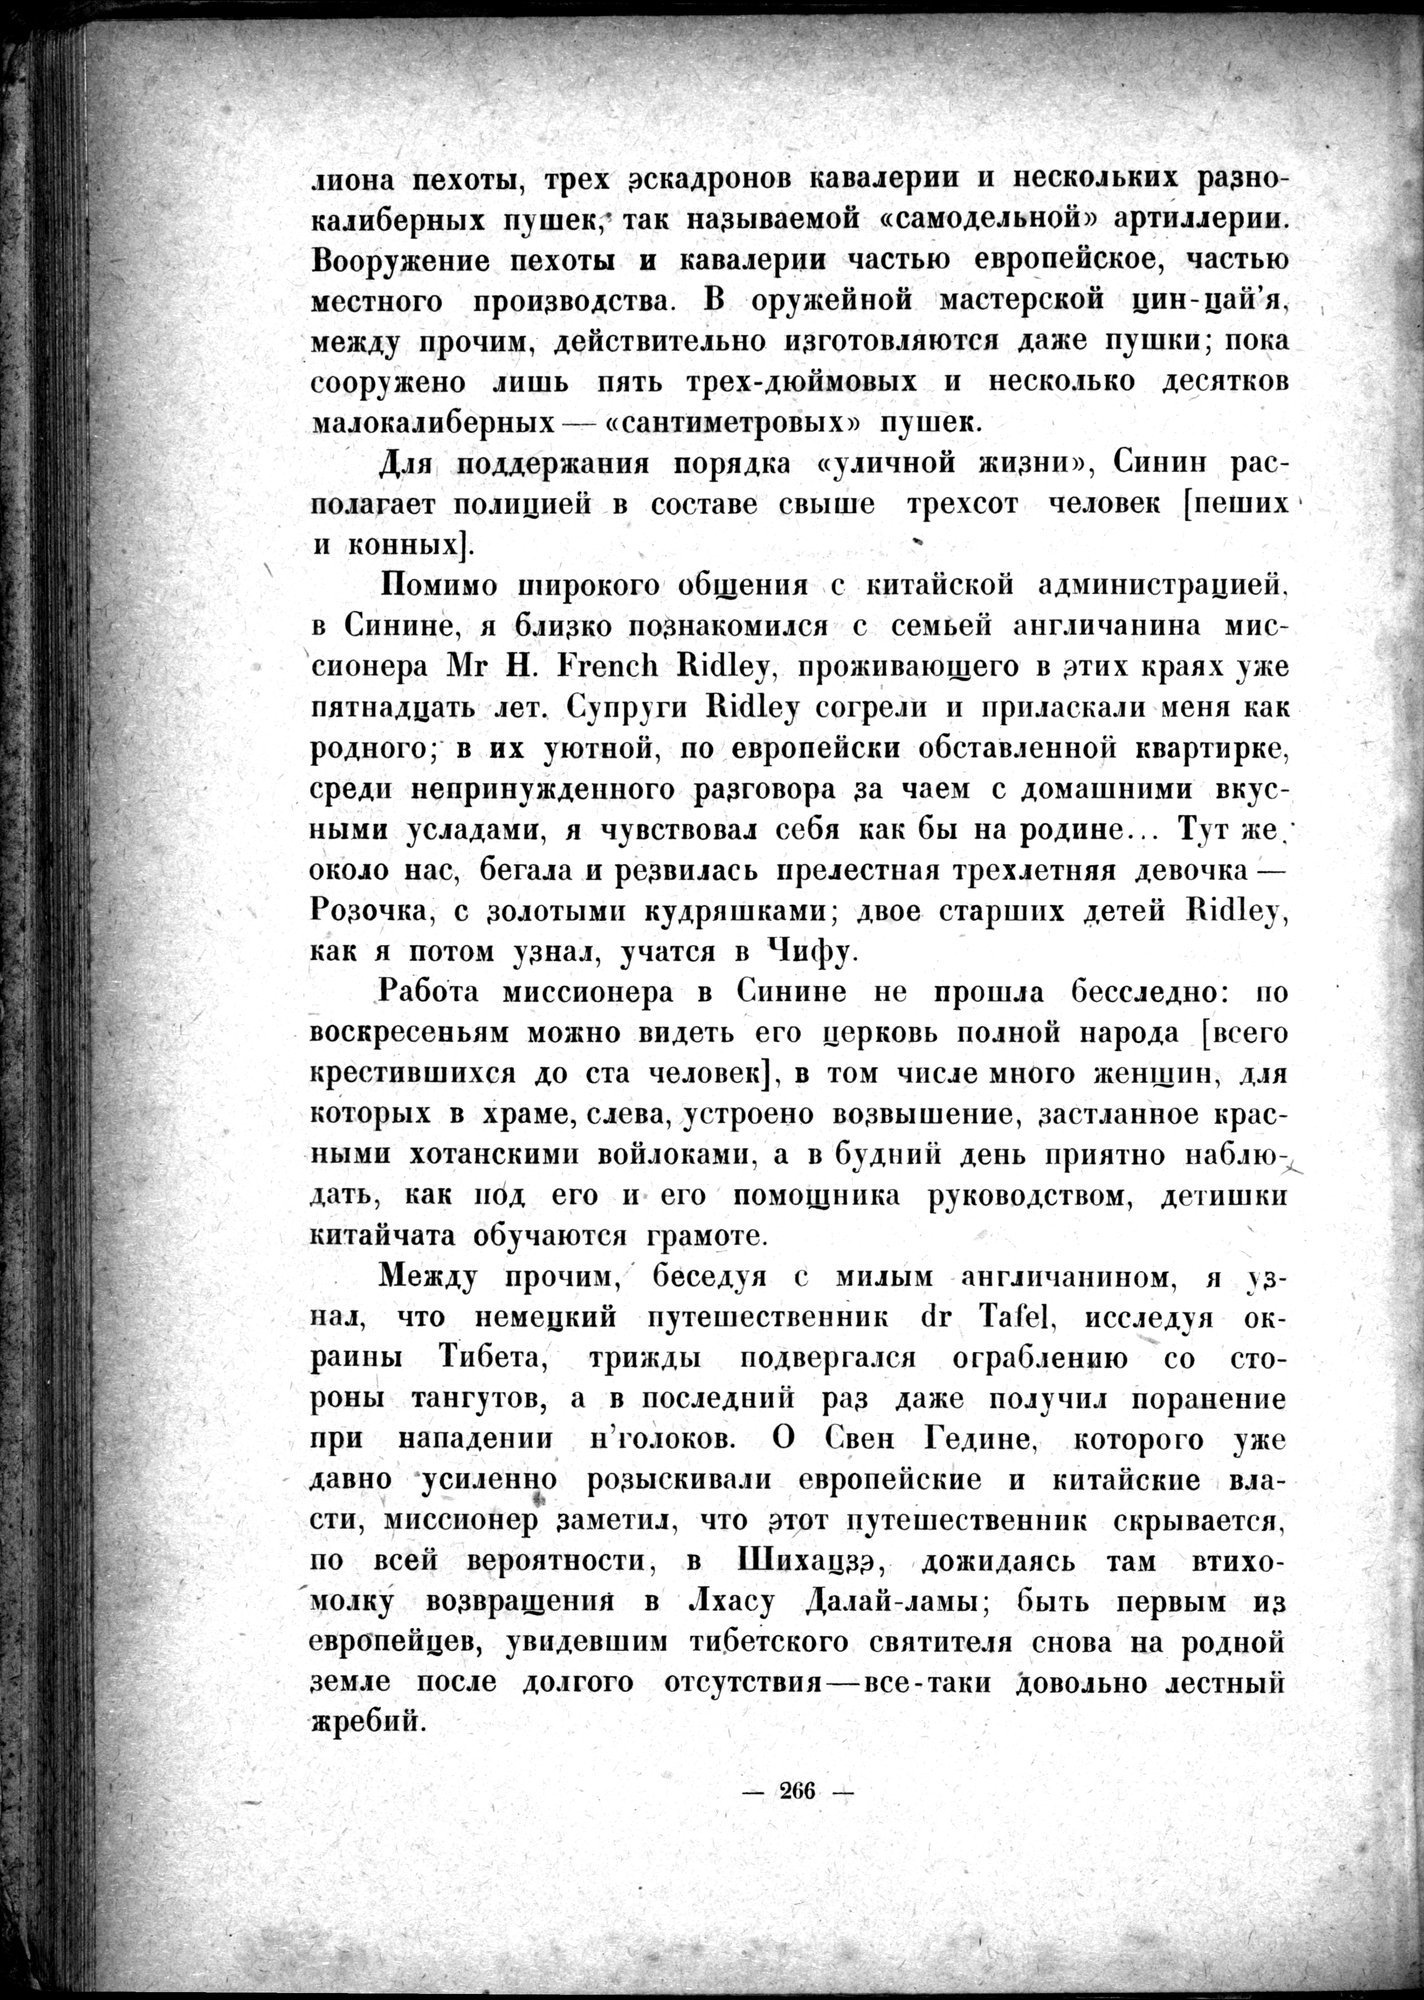 Mongoliya i Amdo i mertby gorod Khara-Khoto : vol.1 / Page 316 (Grayscale High Resolution Image)